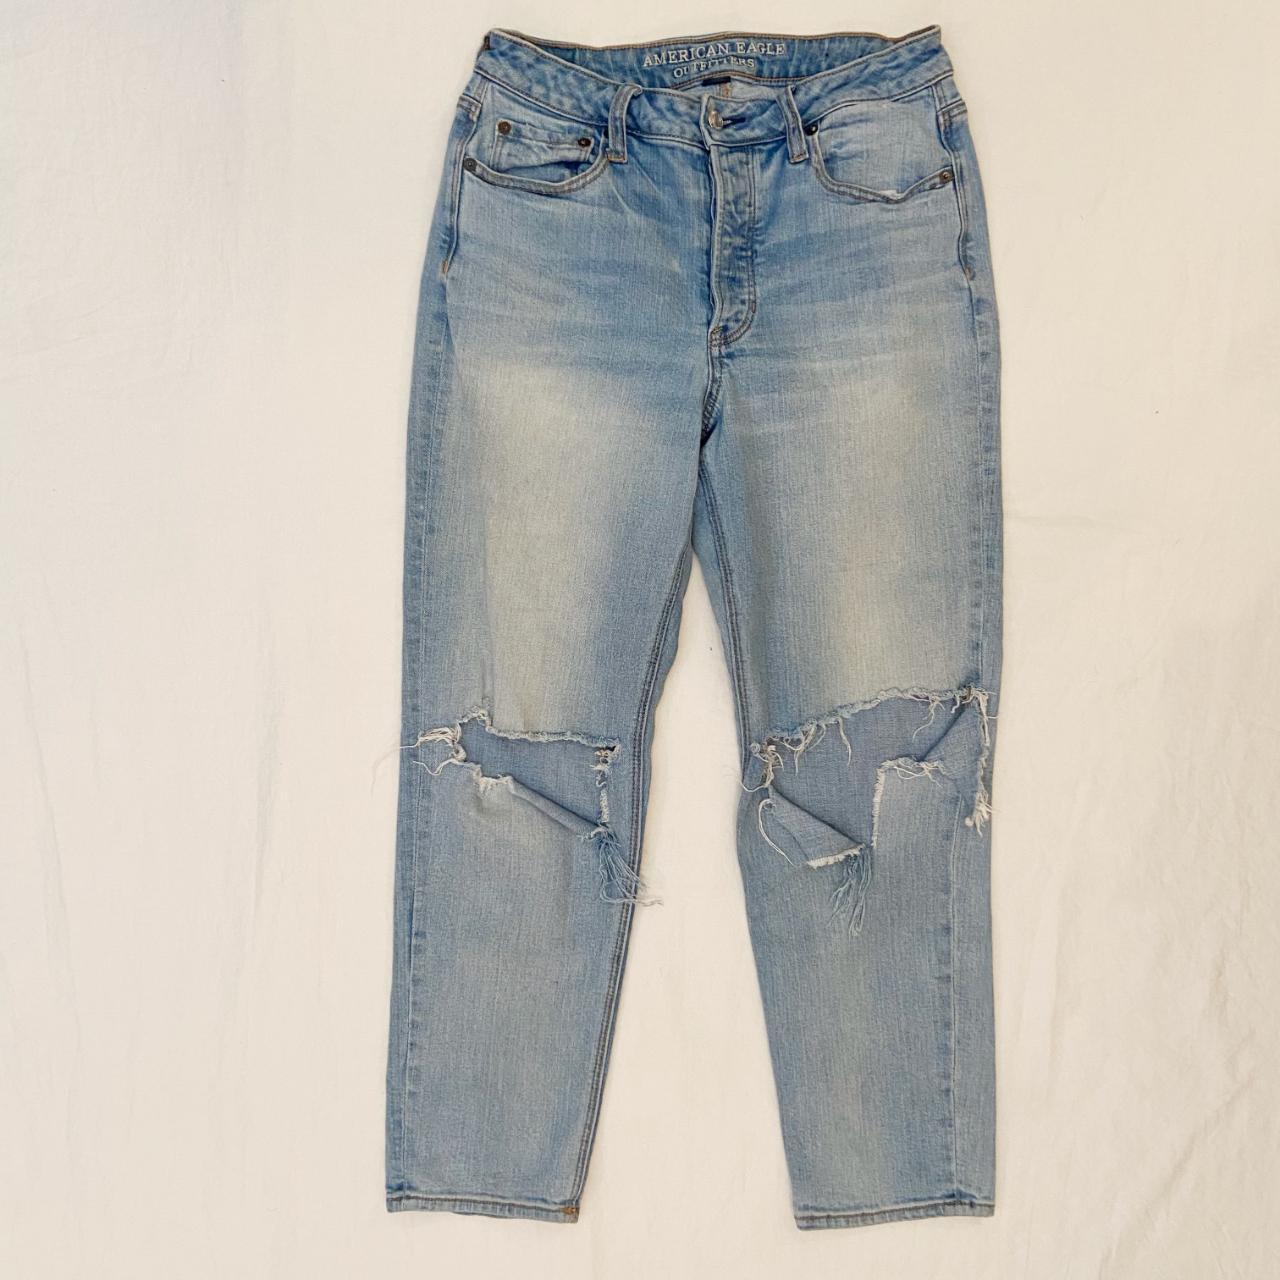 American Eagle High-Rise Jeans Waist: 28.5